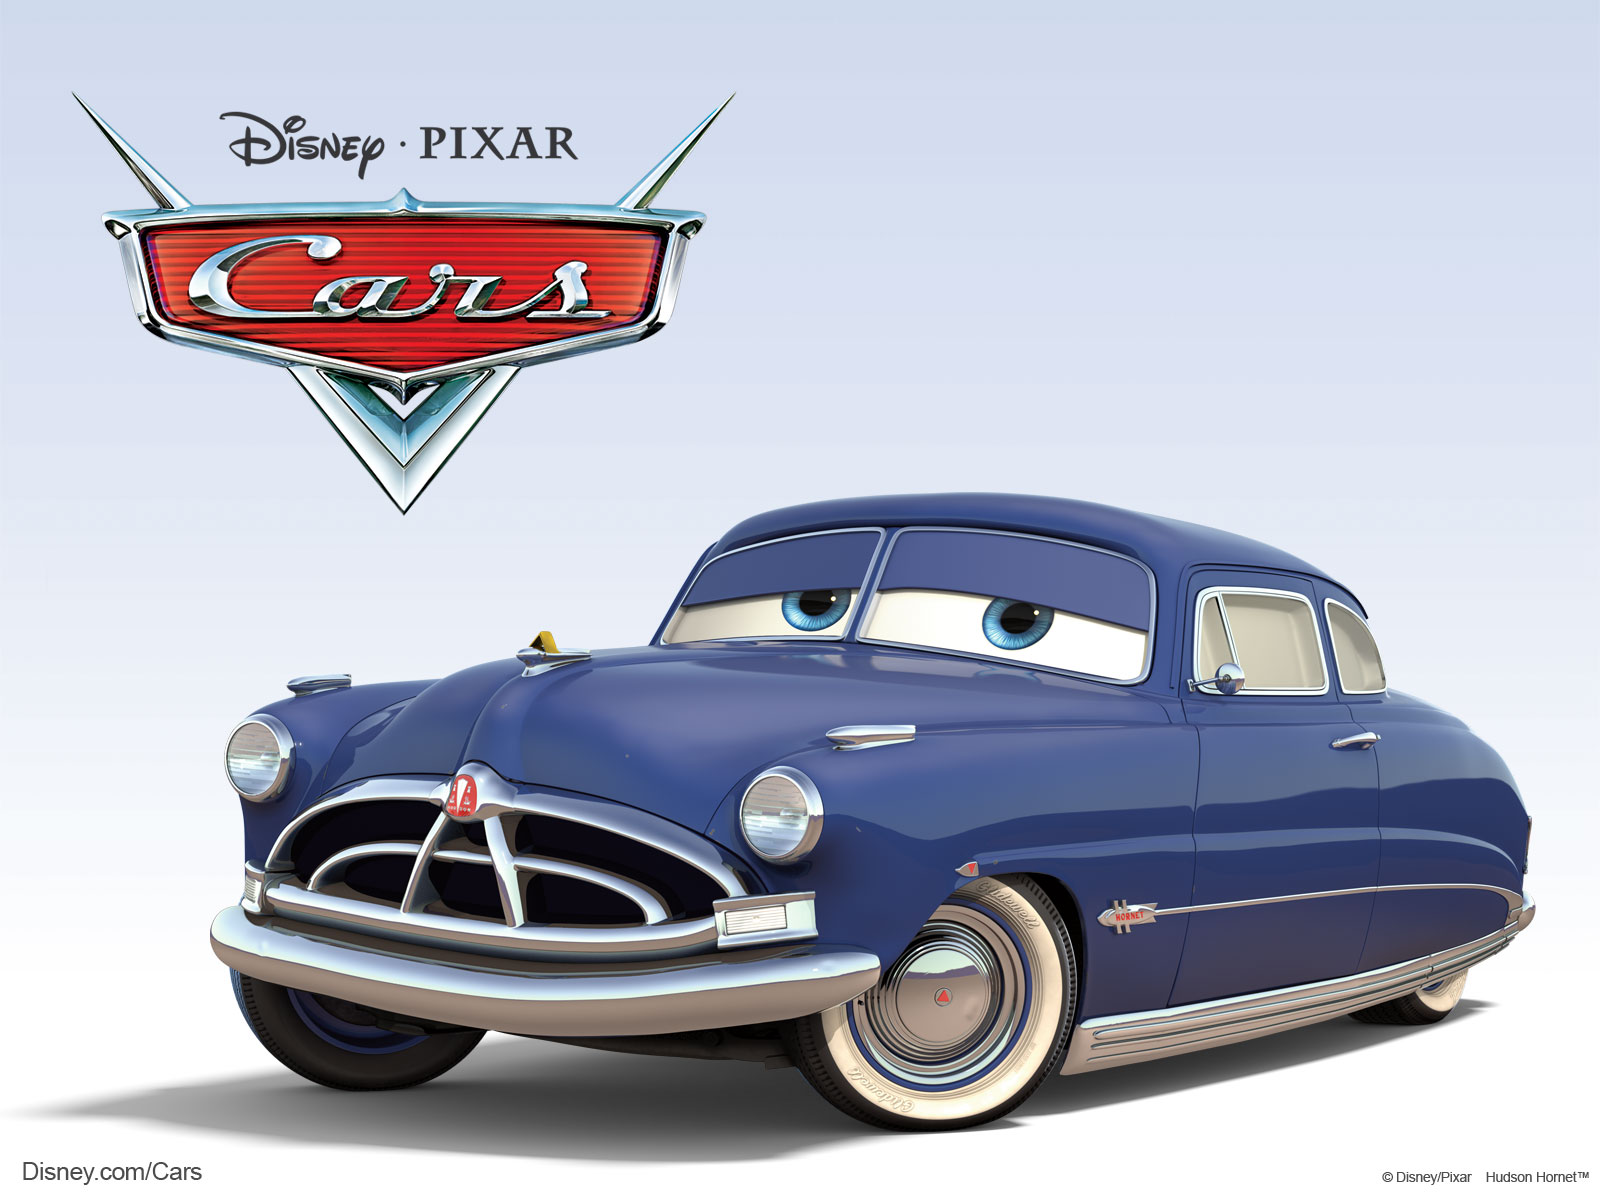 http://4.bp.blogspot.com/__H8Rkdi8DXA/TU3Z5cNnUxI/AAAAAAAAGaA/8UABFqf8f5I/s1600/dochudson-2-Pixar-Cars-Wallpaper.jpg